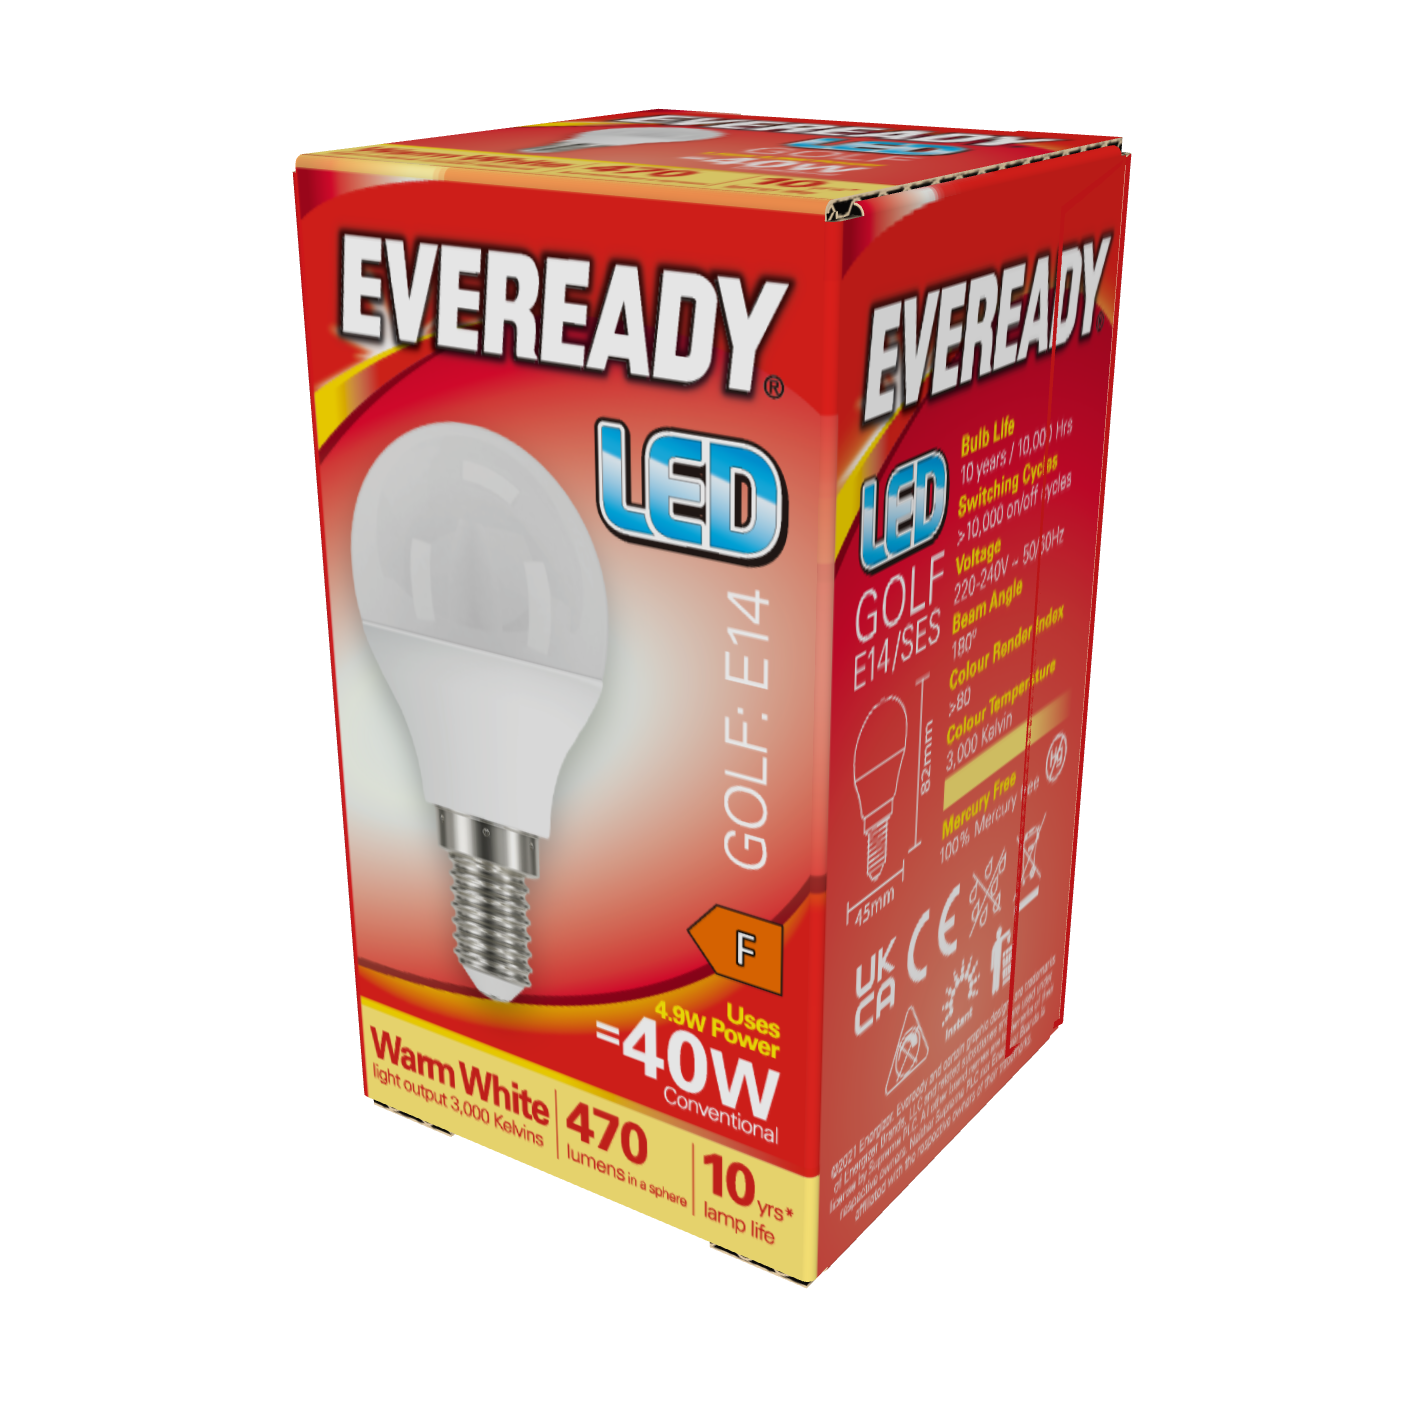 Eveready LED Golf E14 (SES) 470lm 4.9W 3,000K (Warm White), Box of 1